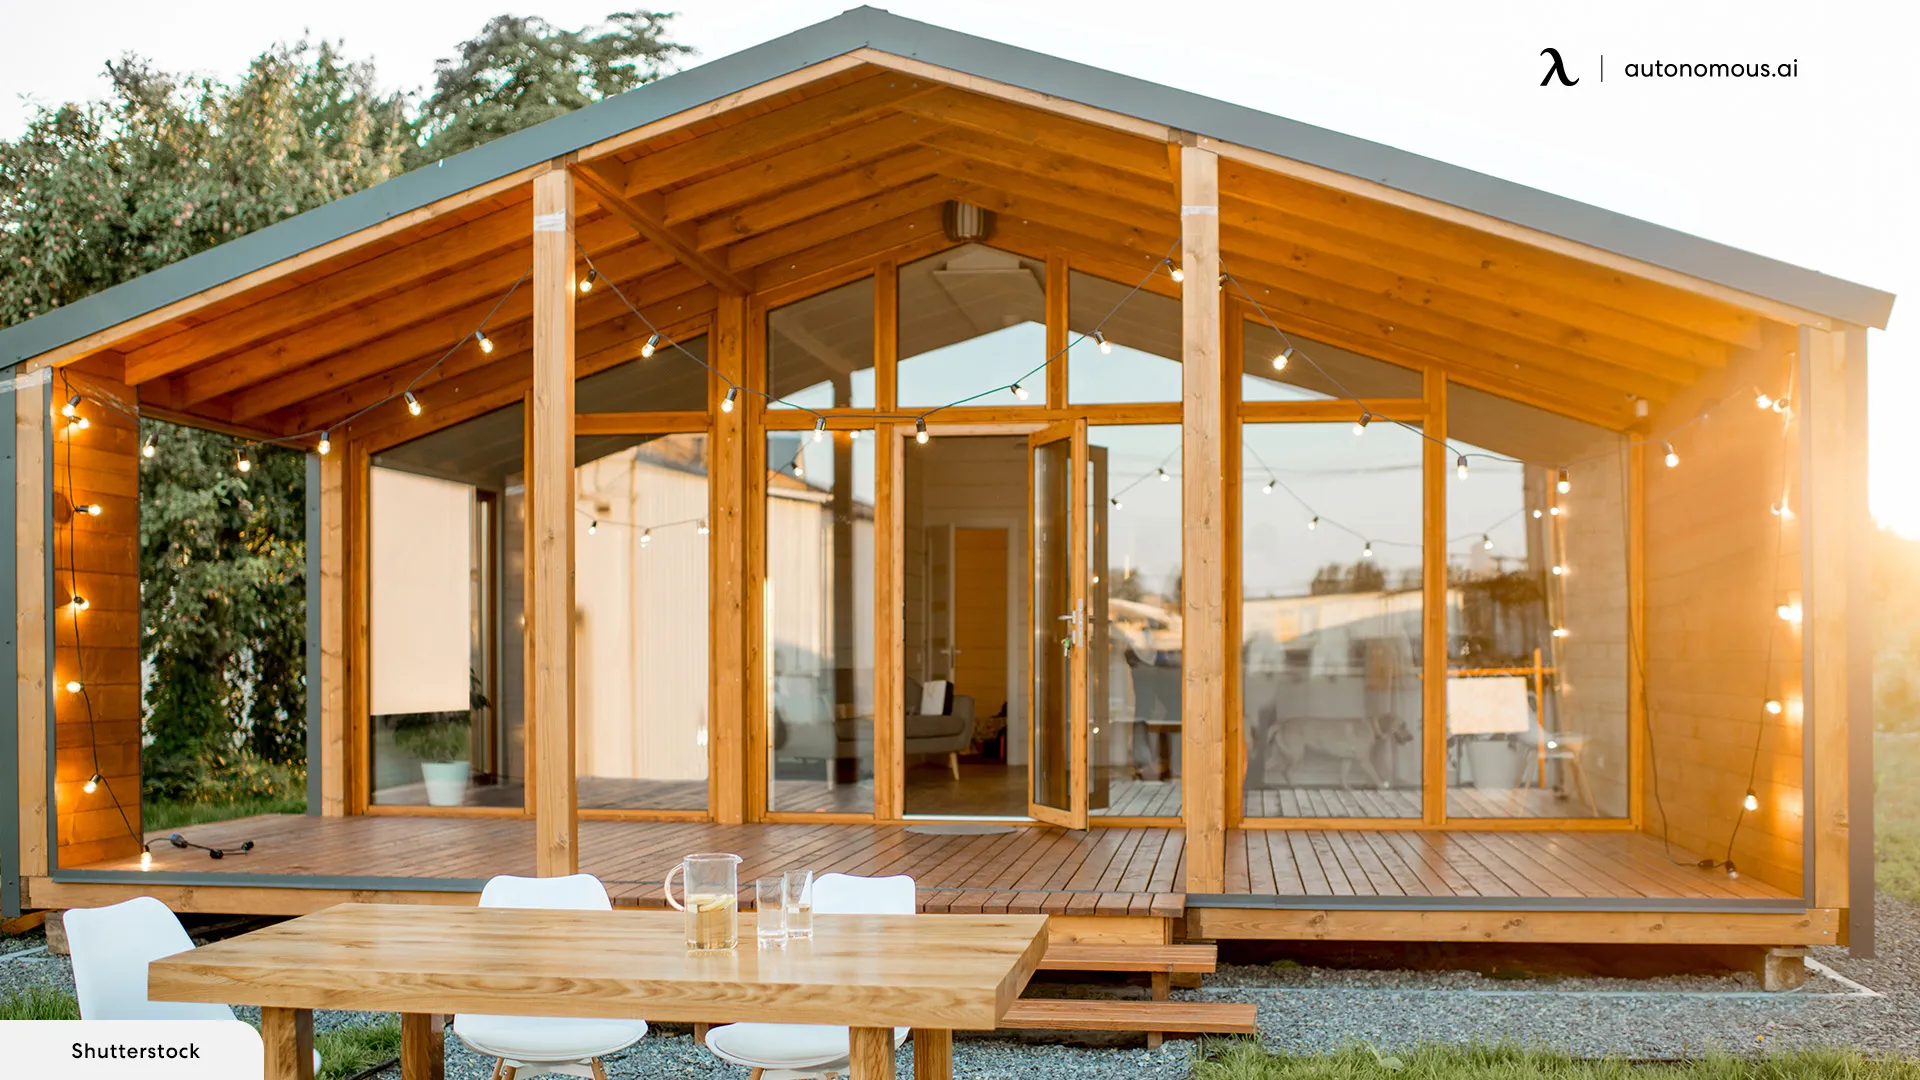 Can I build a backyard tiny home as an ADU in California?